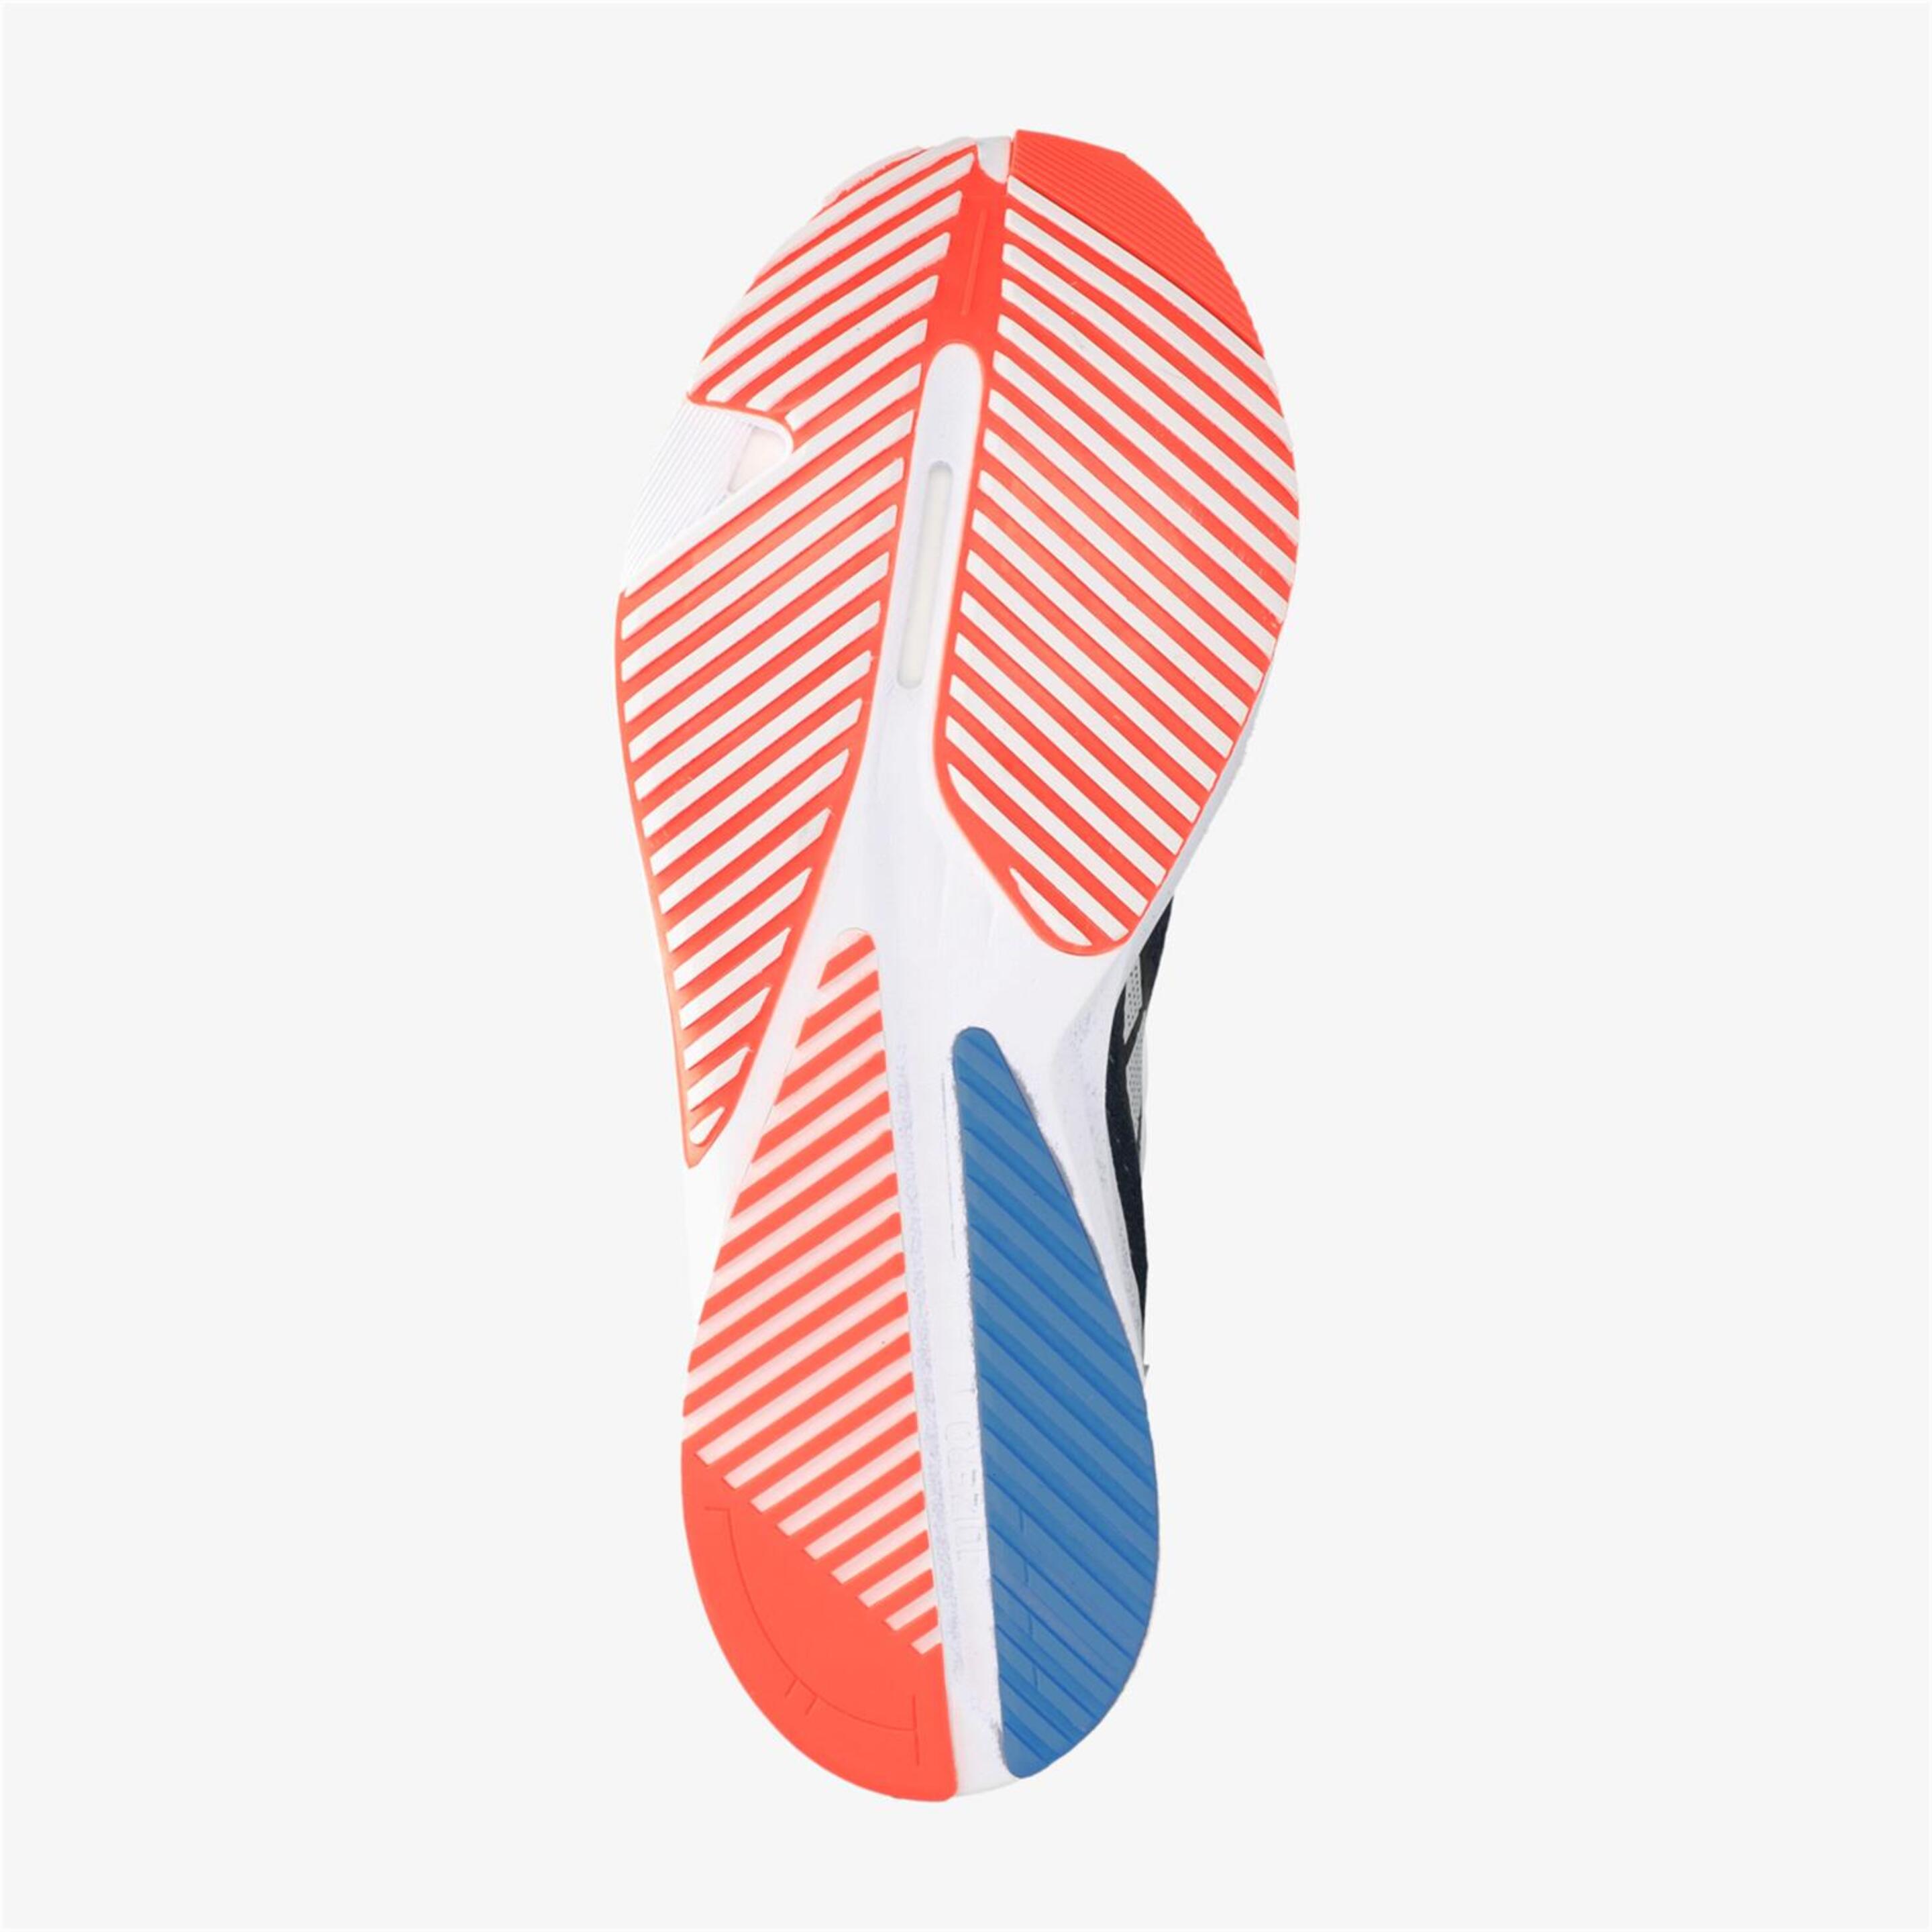 adidas Adizero SL - Marino - Zapatillas Running Hombre